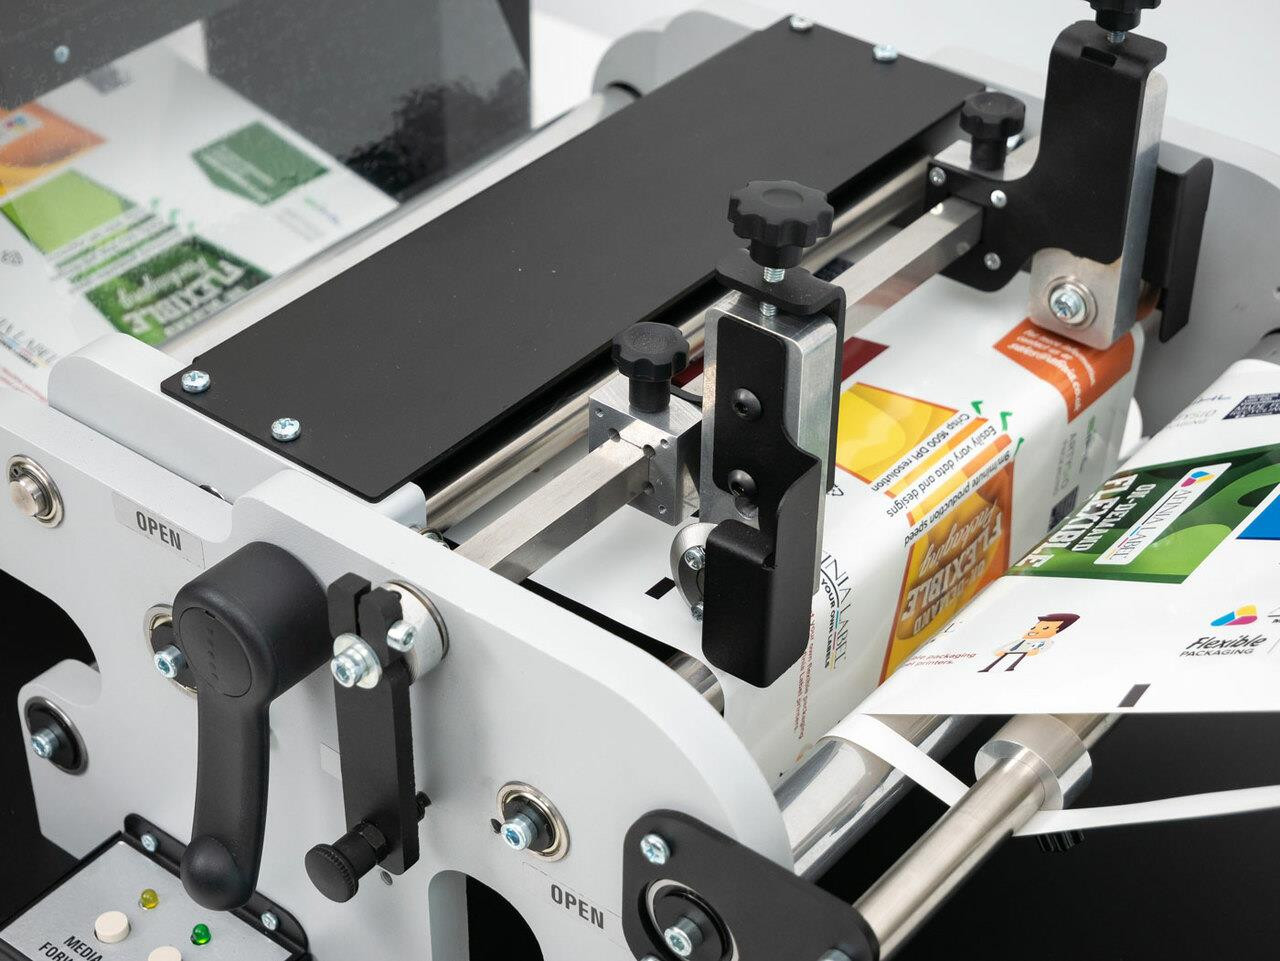 AFINIA CP950 Cardstock & Packaging Printer, Warranty: Upto 1 Year